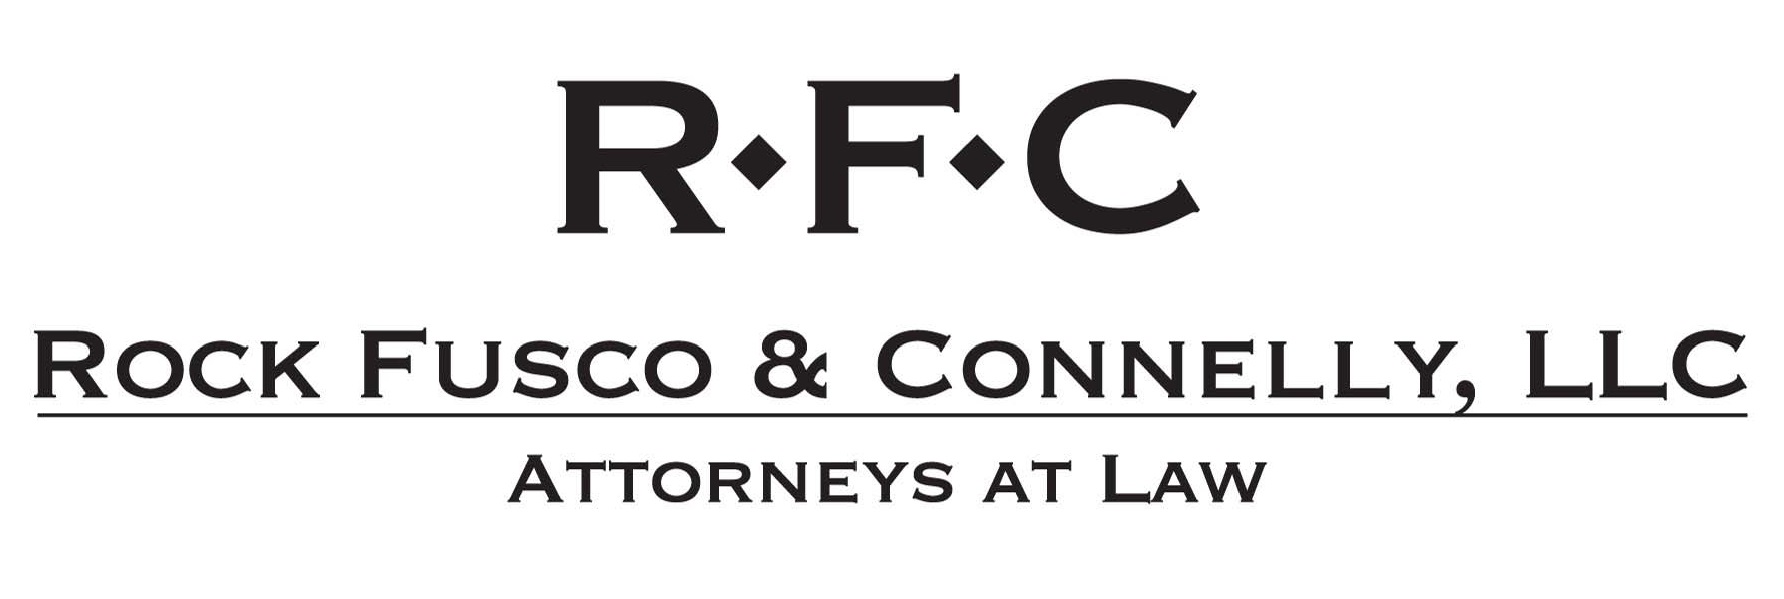 Rock Fusco & Connelly, LLC